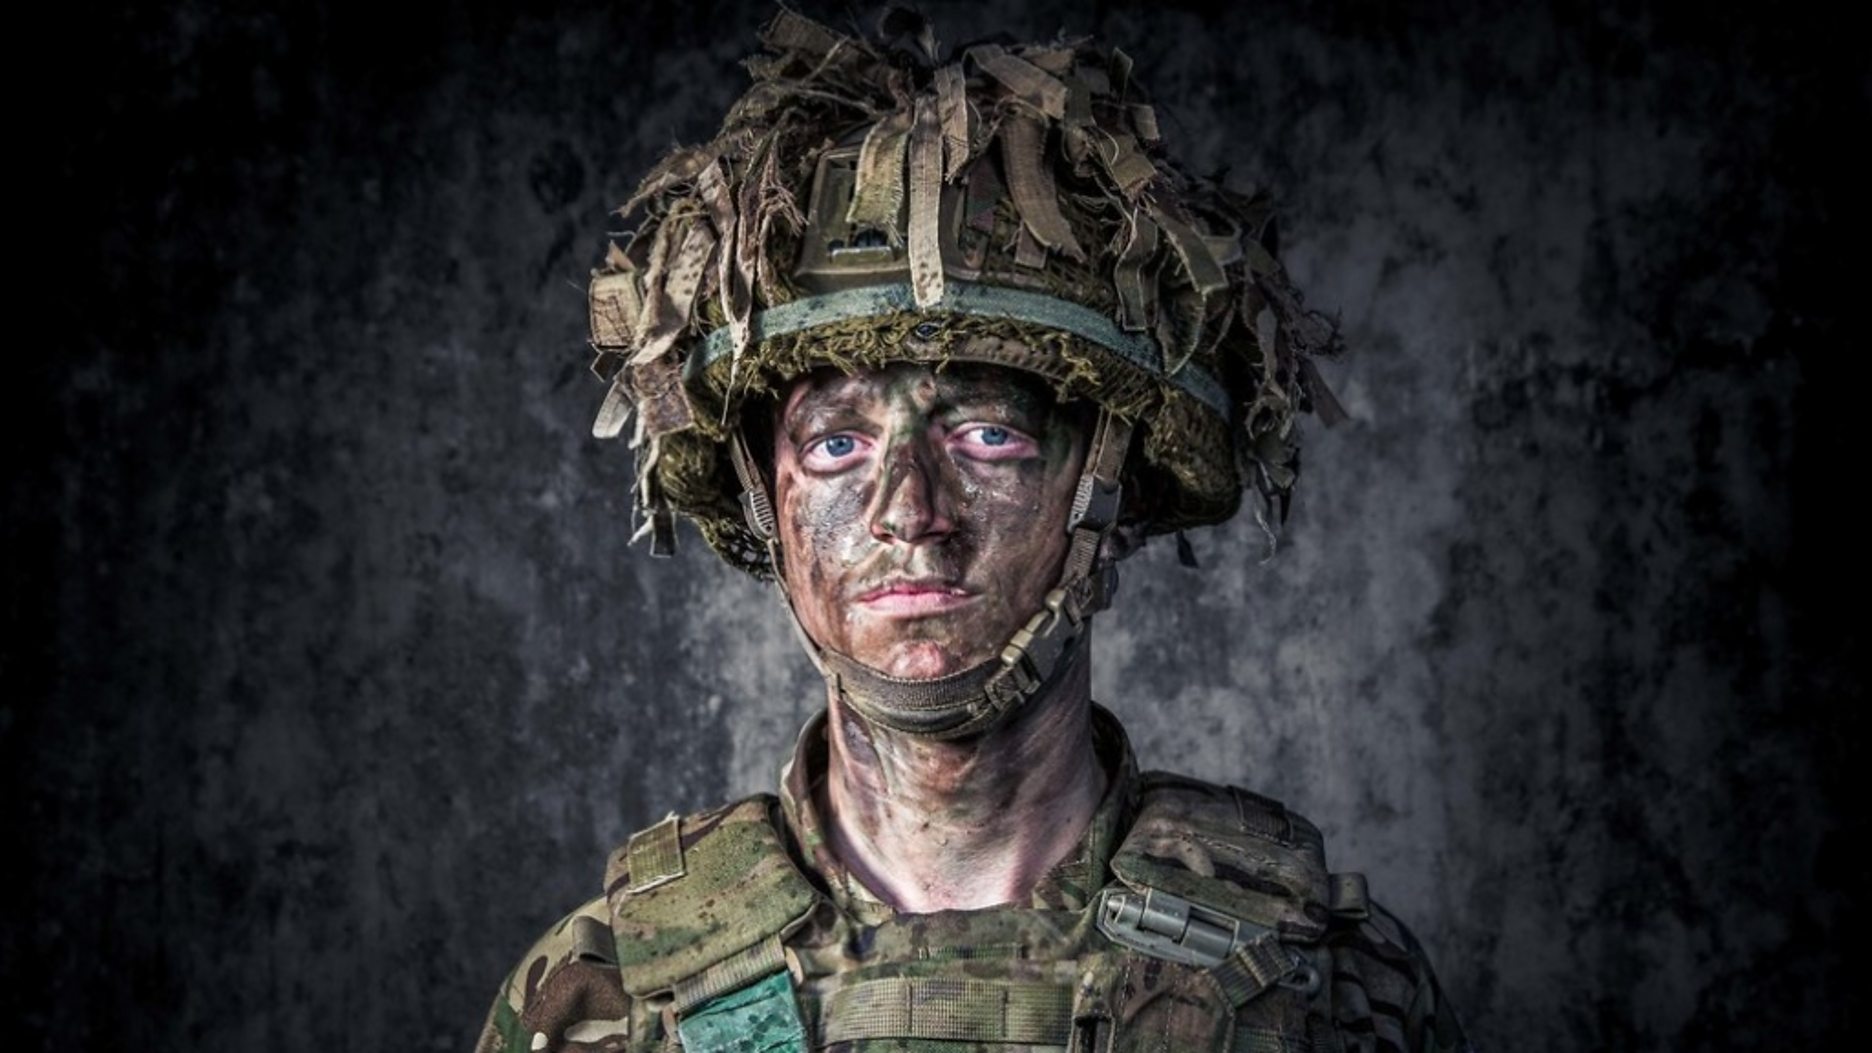 Meet the Soldier Recruit - Private Callum Stretton